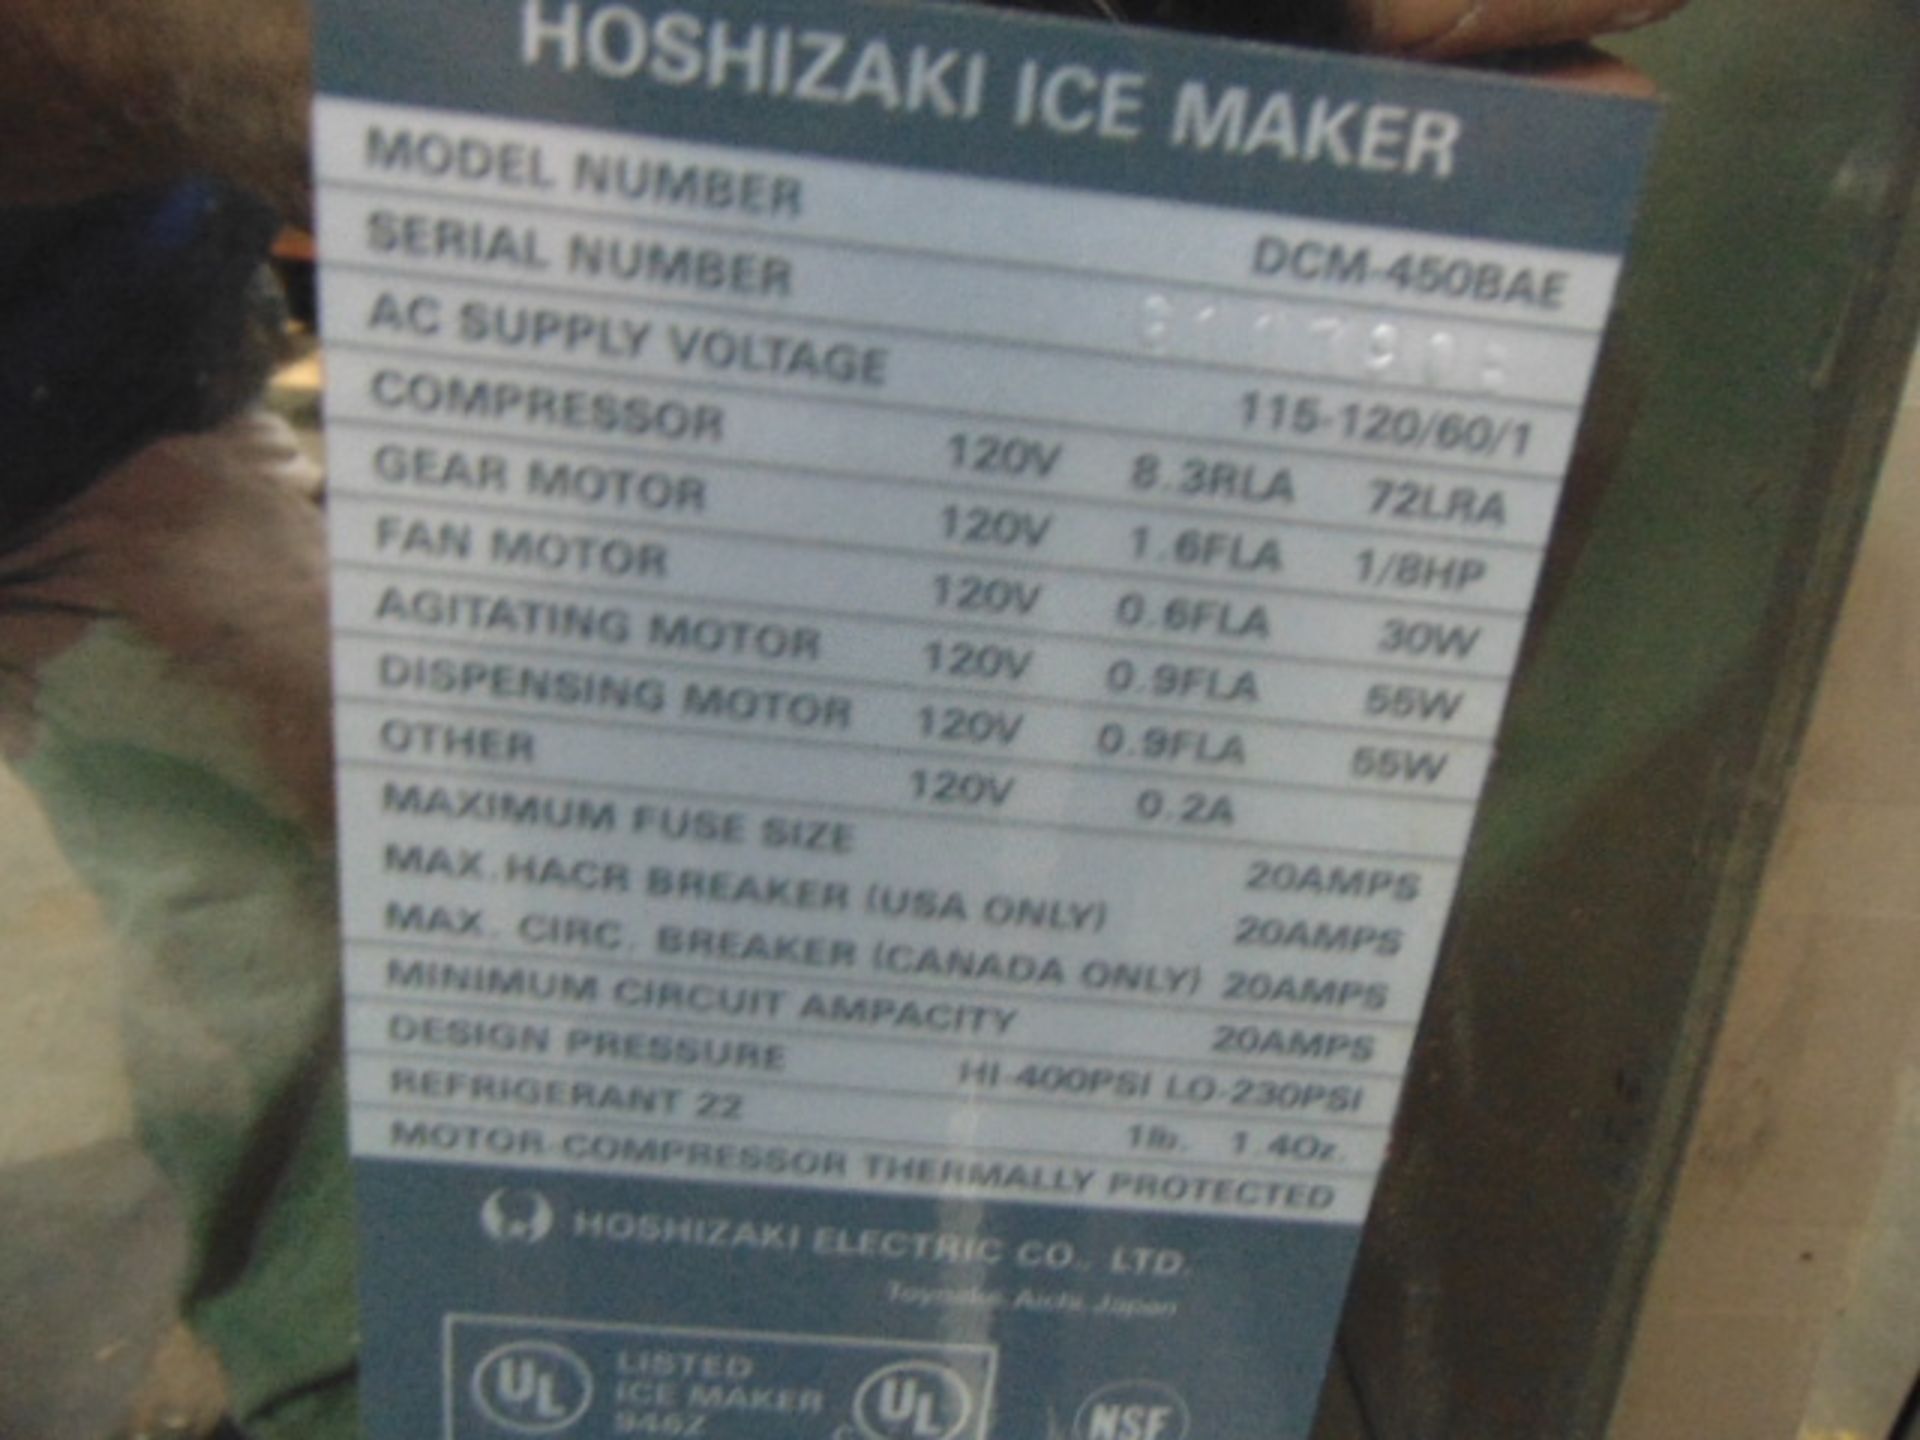 ICE MAKER, HOSHIZAKI MDL. DCM-450BAE, S/N G11790B - Image 2 of 2